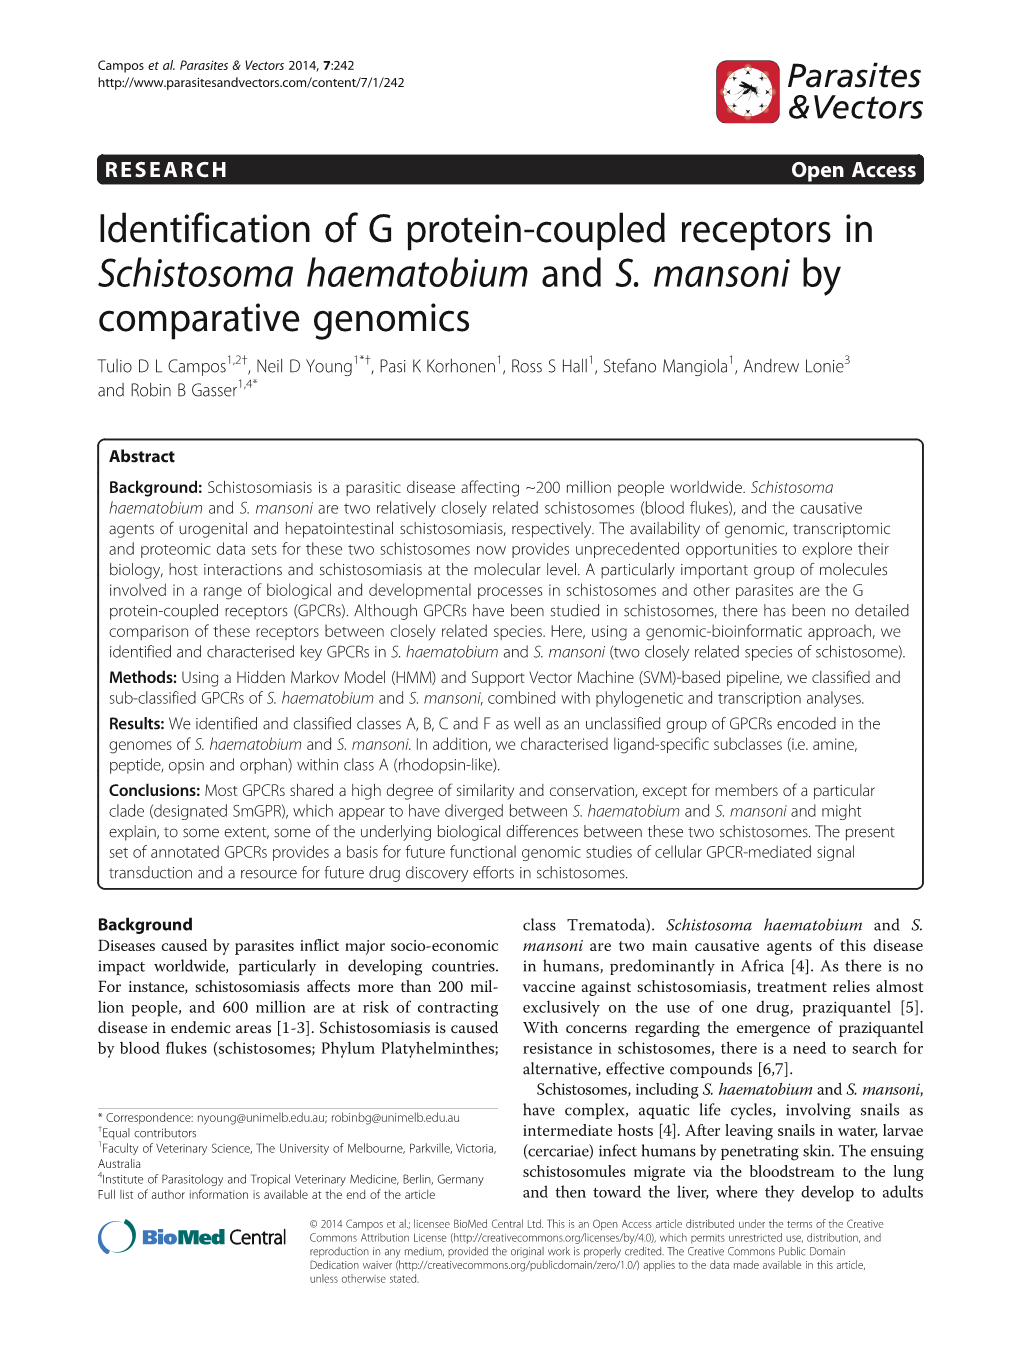 Identification of G Protein-Coupled Receptors in Schistosoma Haematobium and S